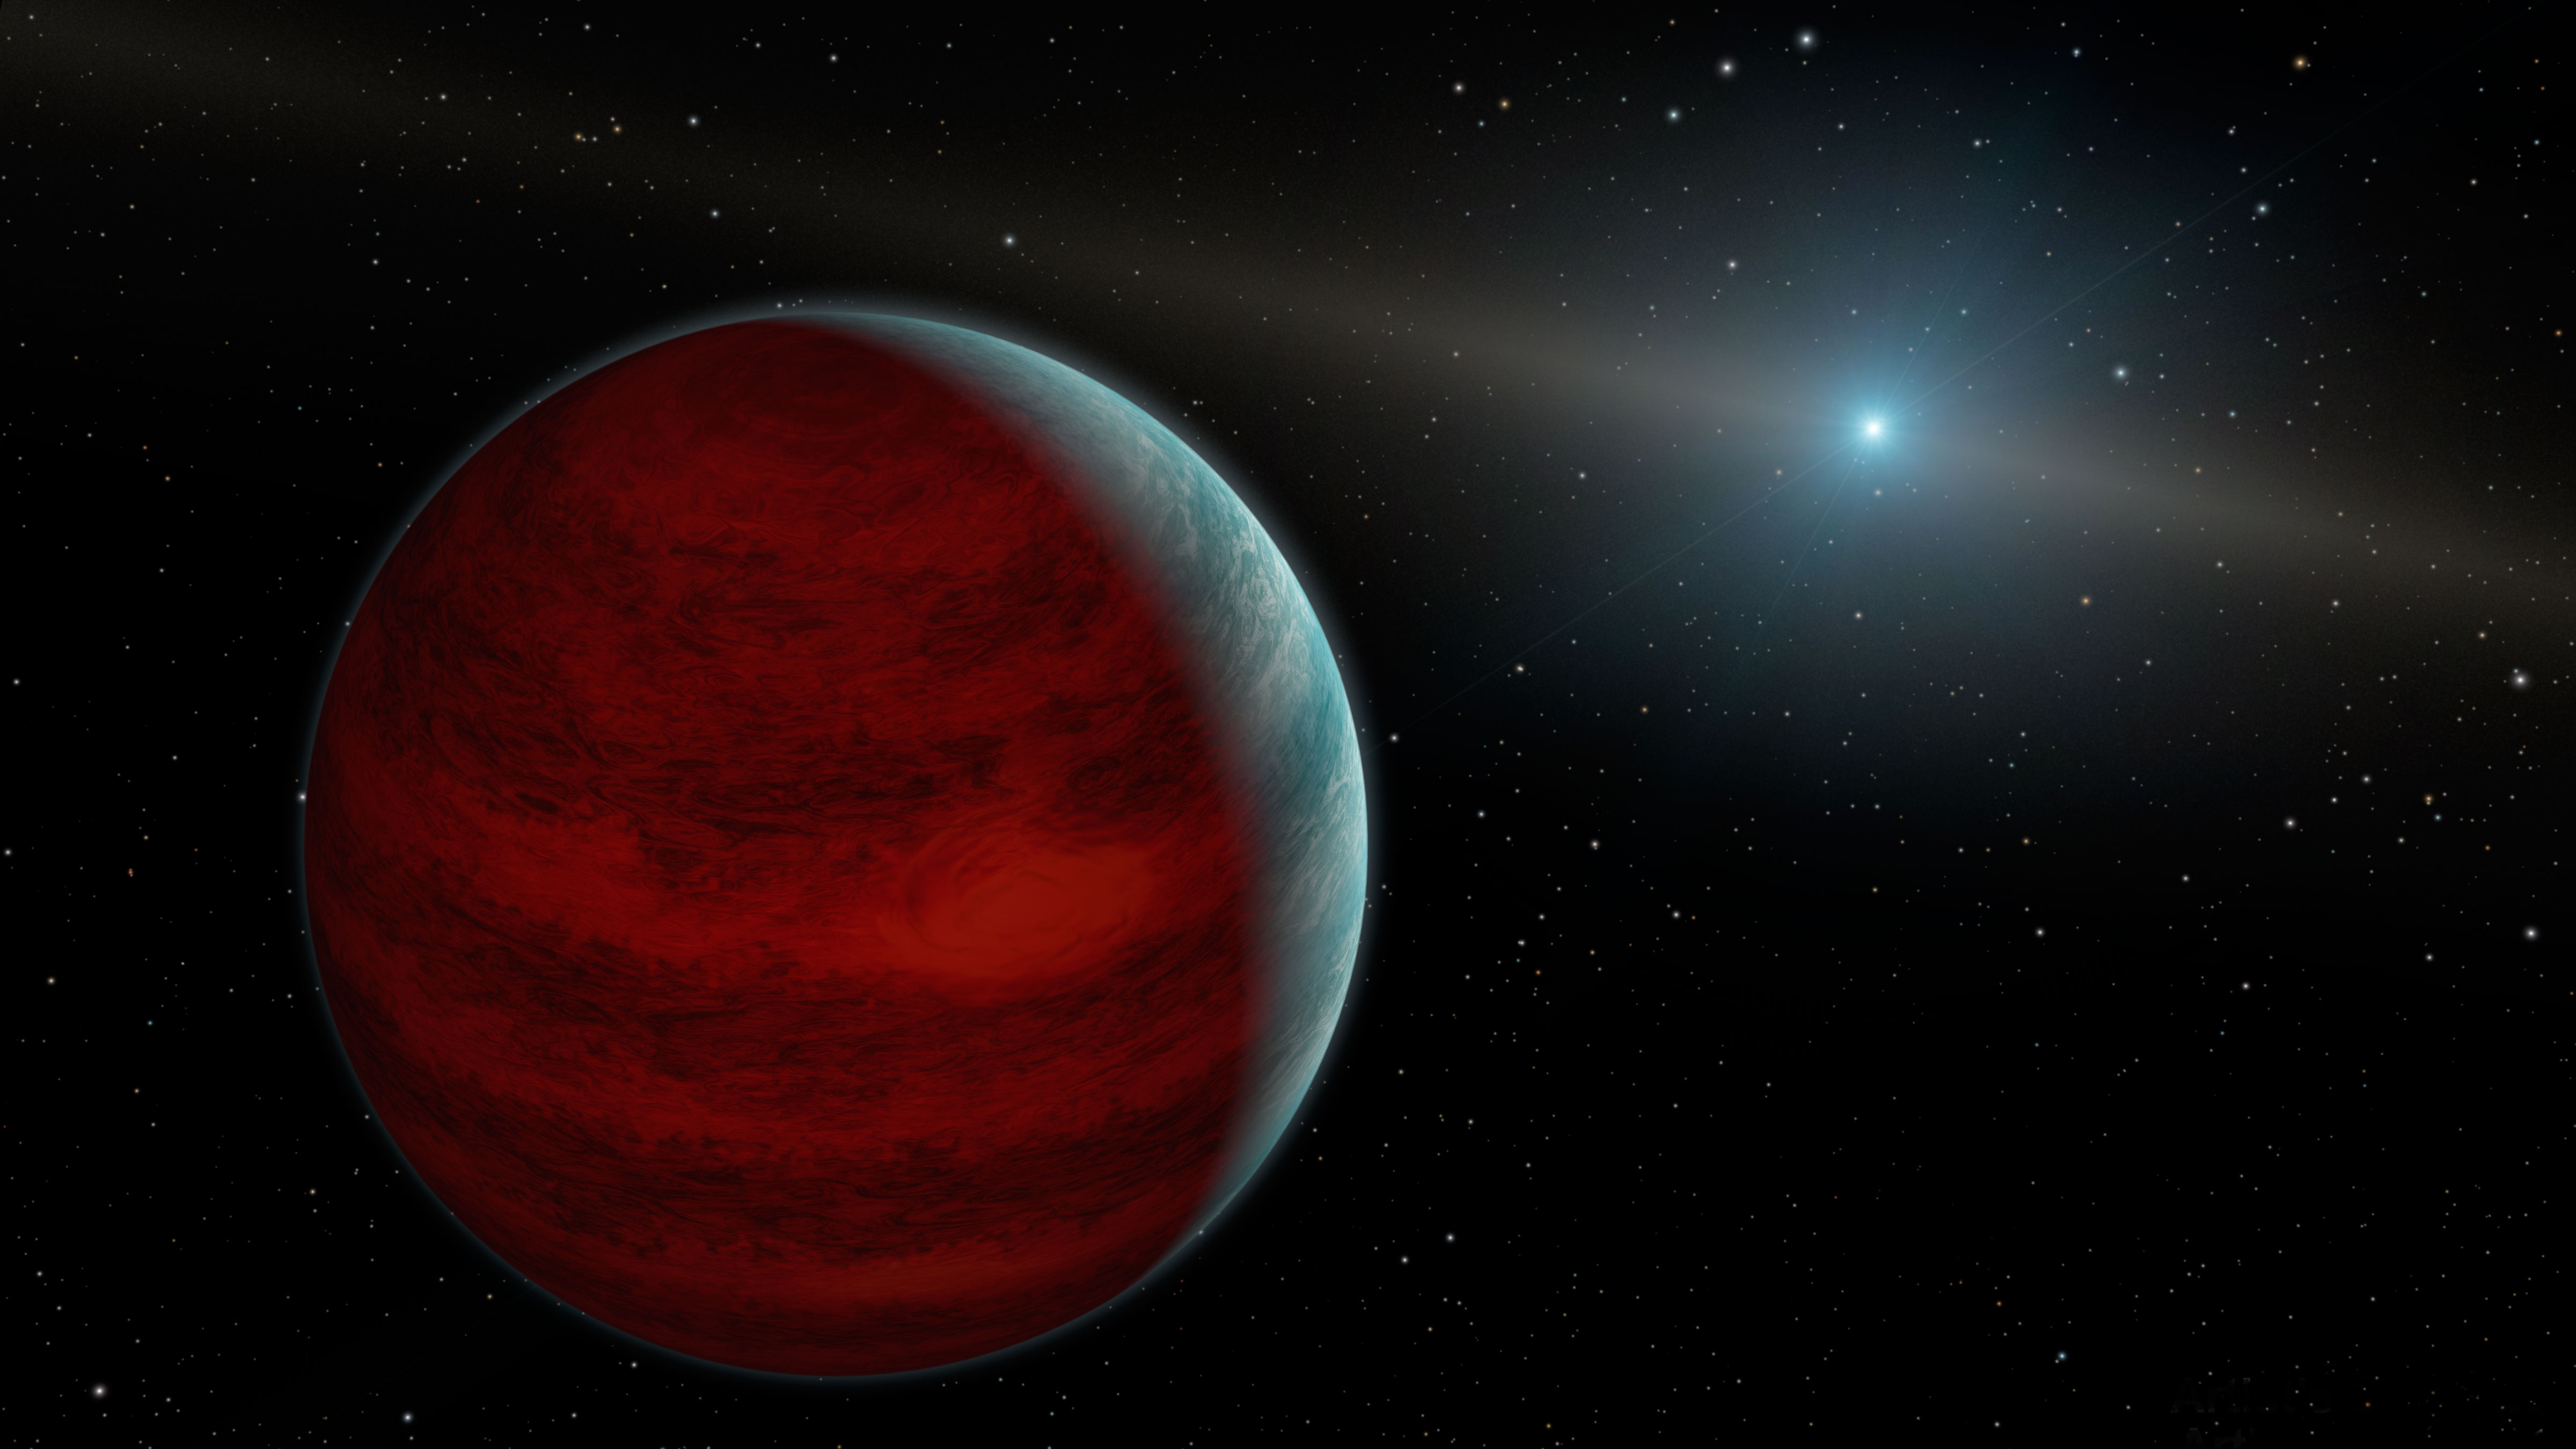 Artist’s concept or a rejuvenated planet. Credit: NASA/JPL-Caltech